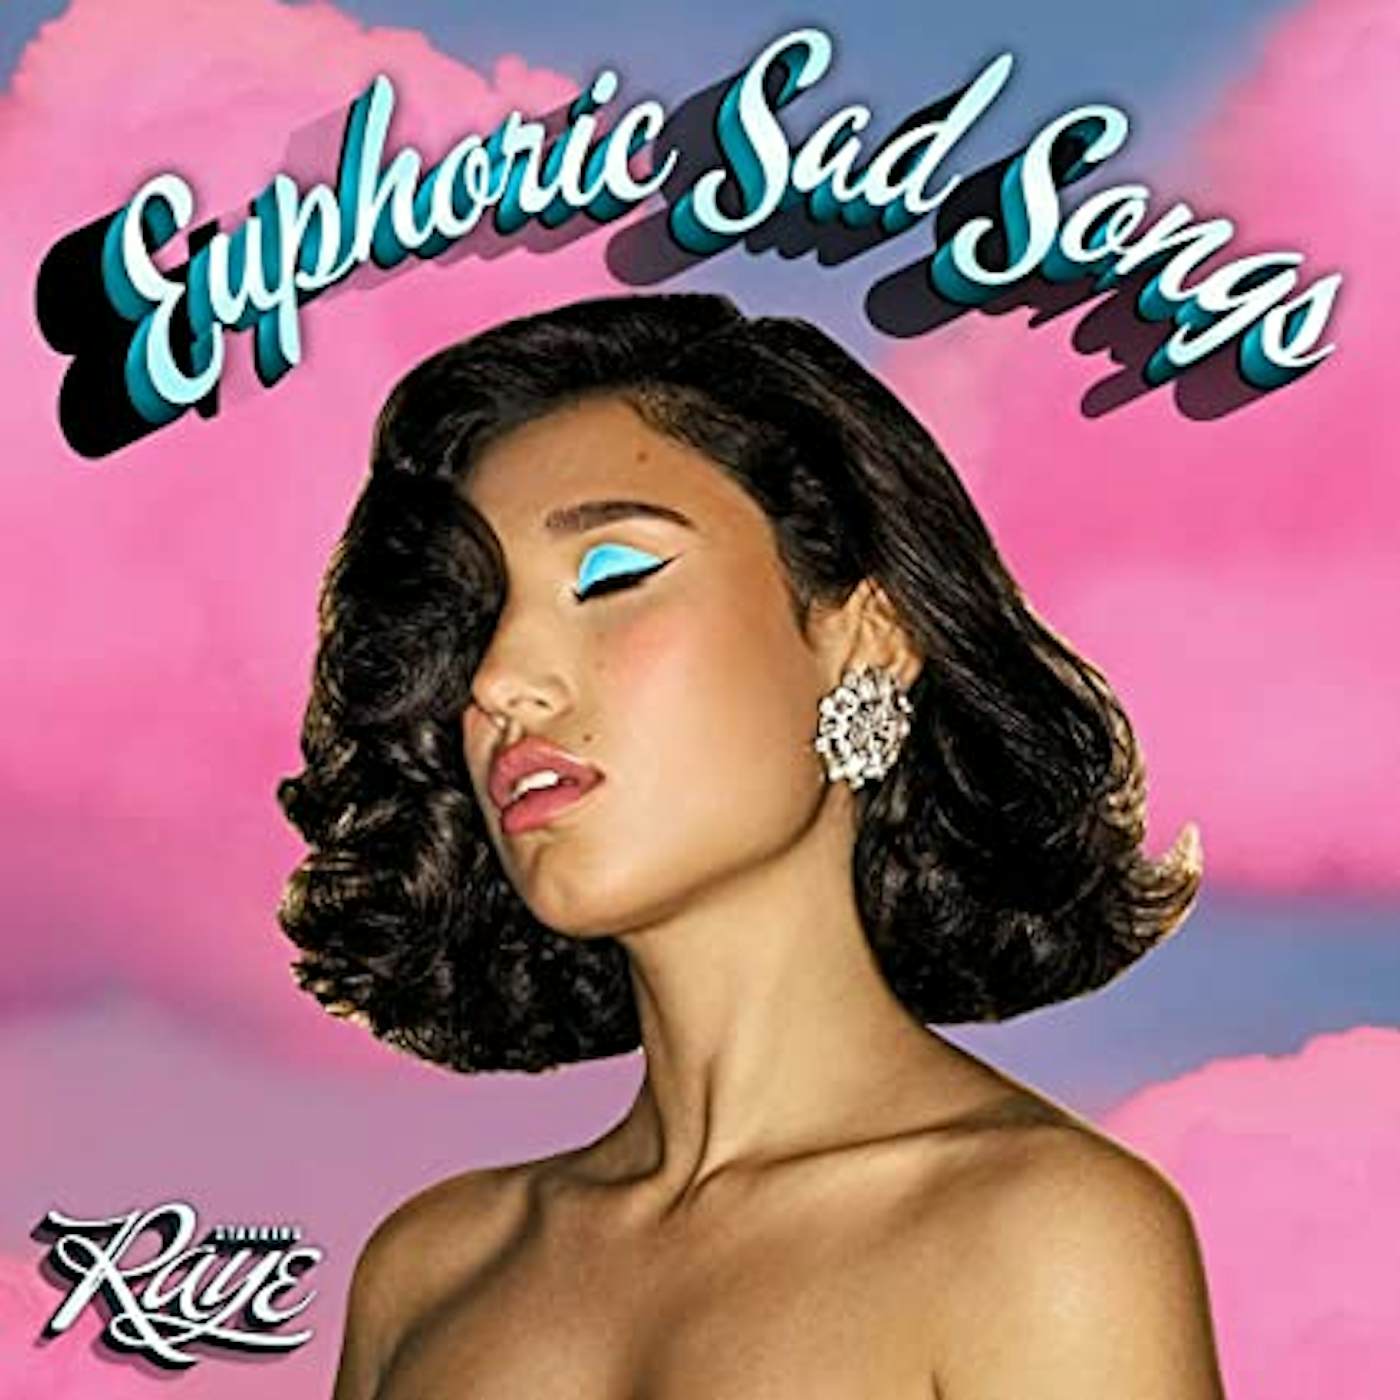 RAYE Euphoric Sad Songs Vinyl Record